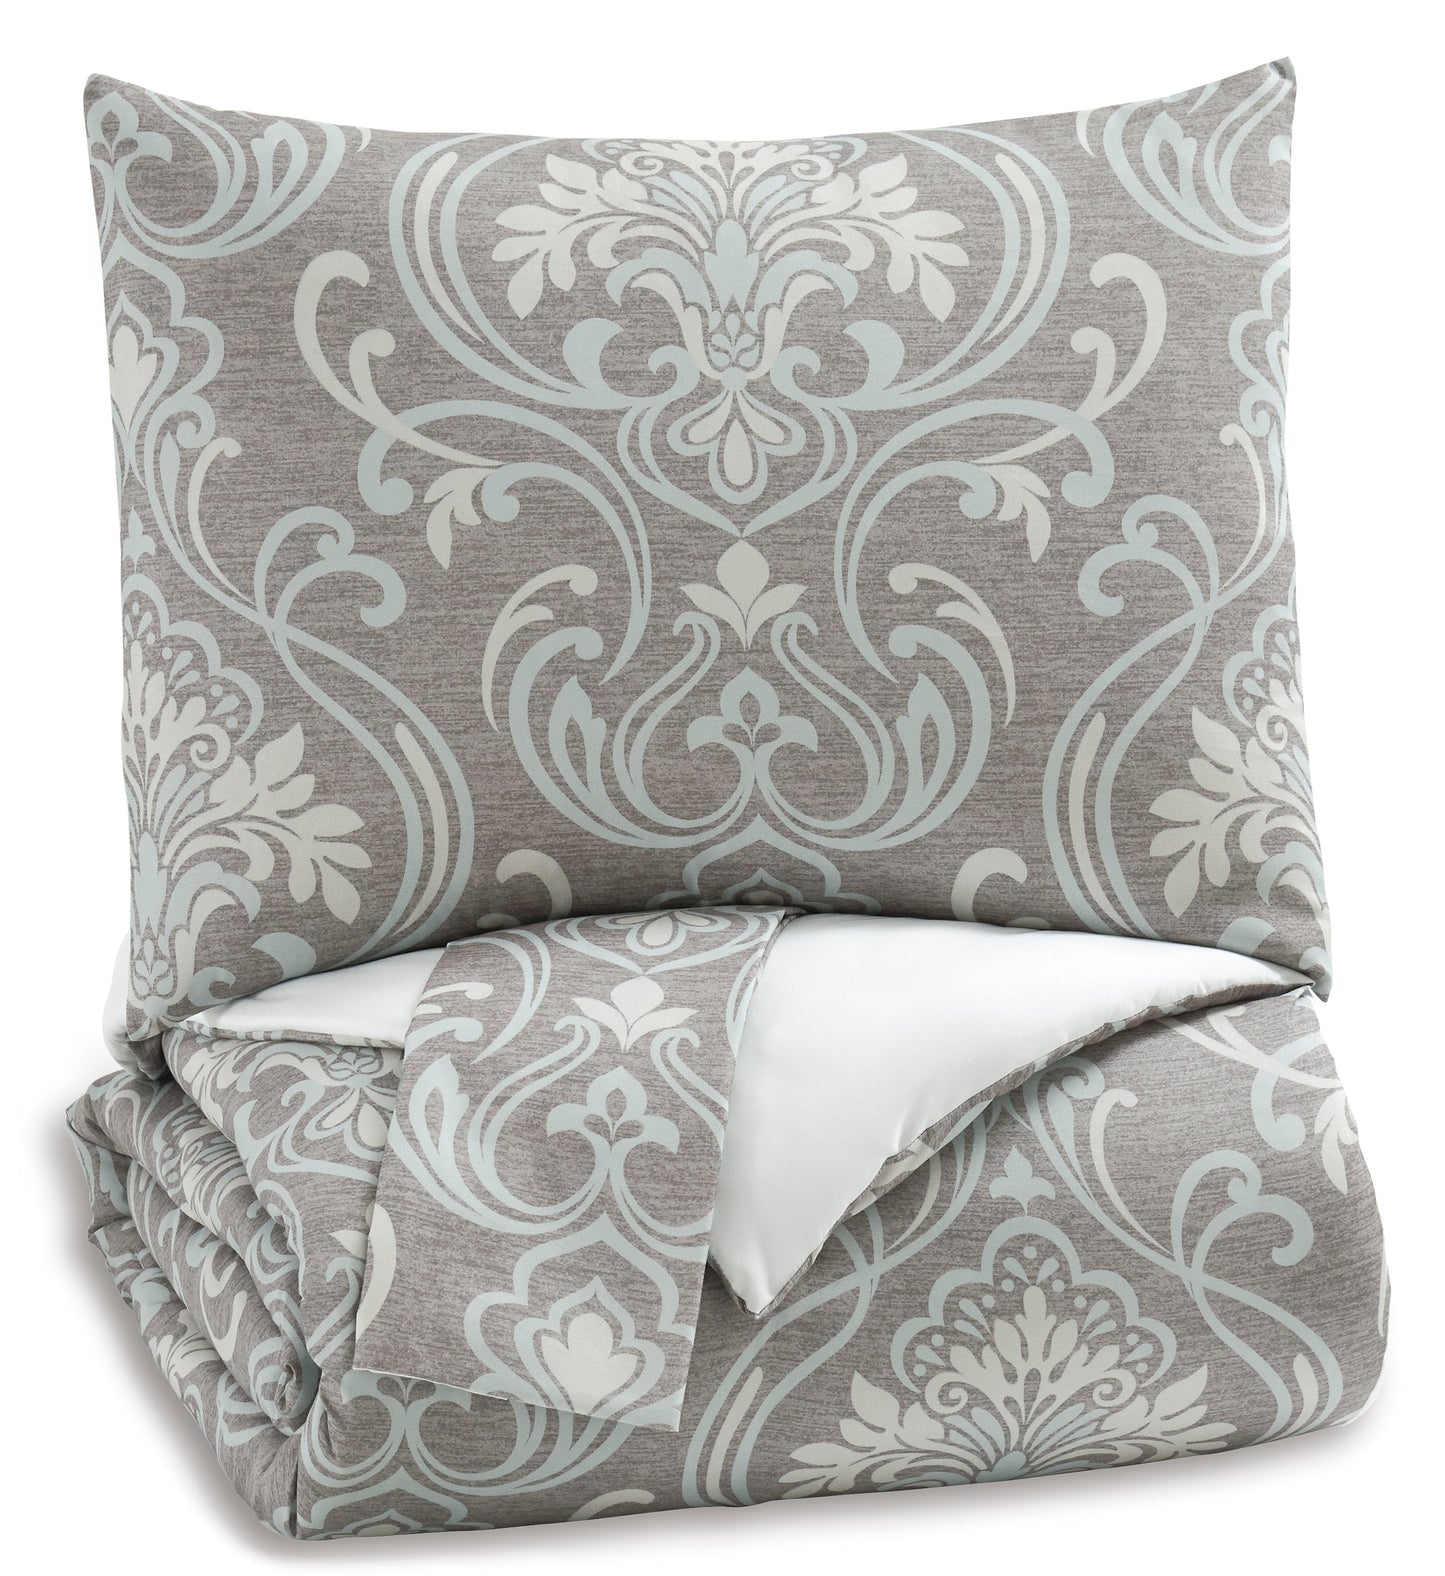 Ashley Signature Design Noel 3-Piece King Comforter Set Gray/Tan Q780003K